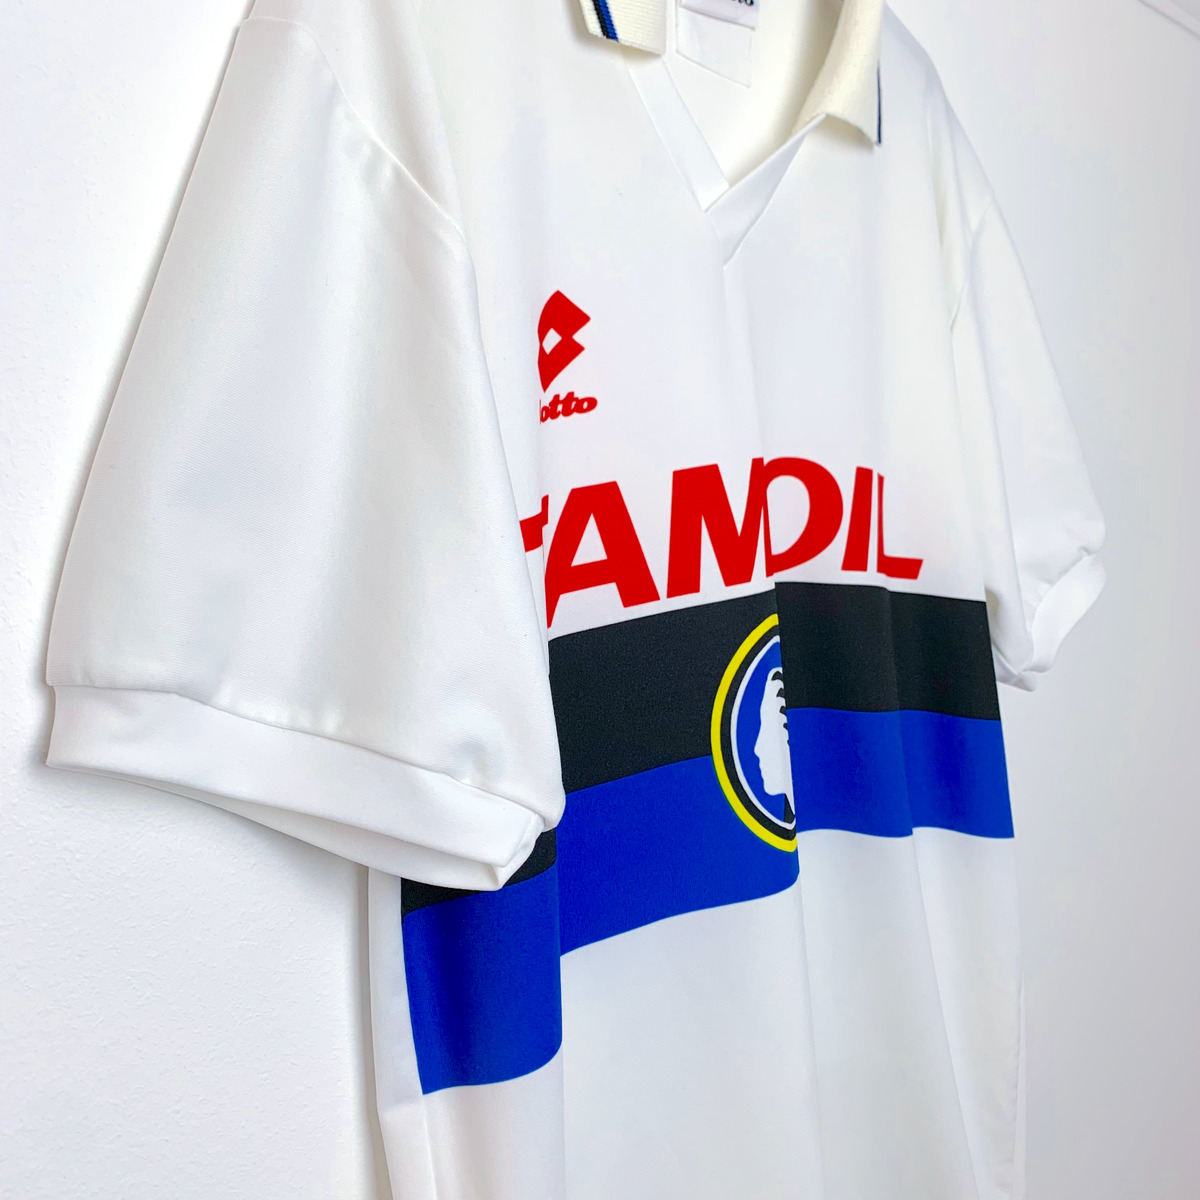 Atalanta 1990-91 Away Kit